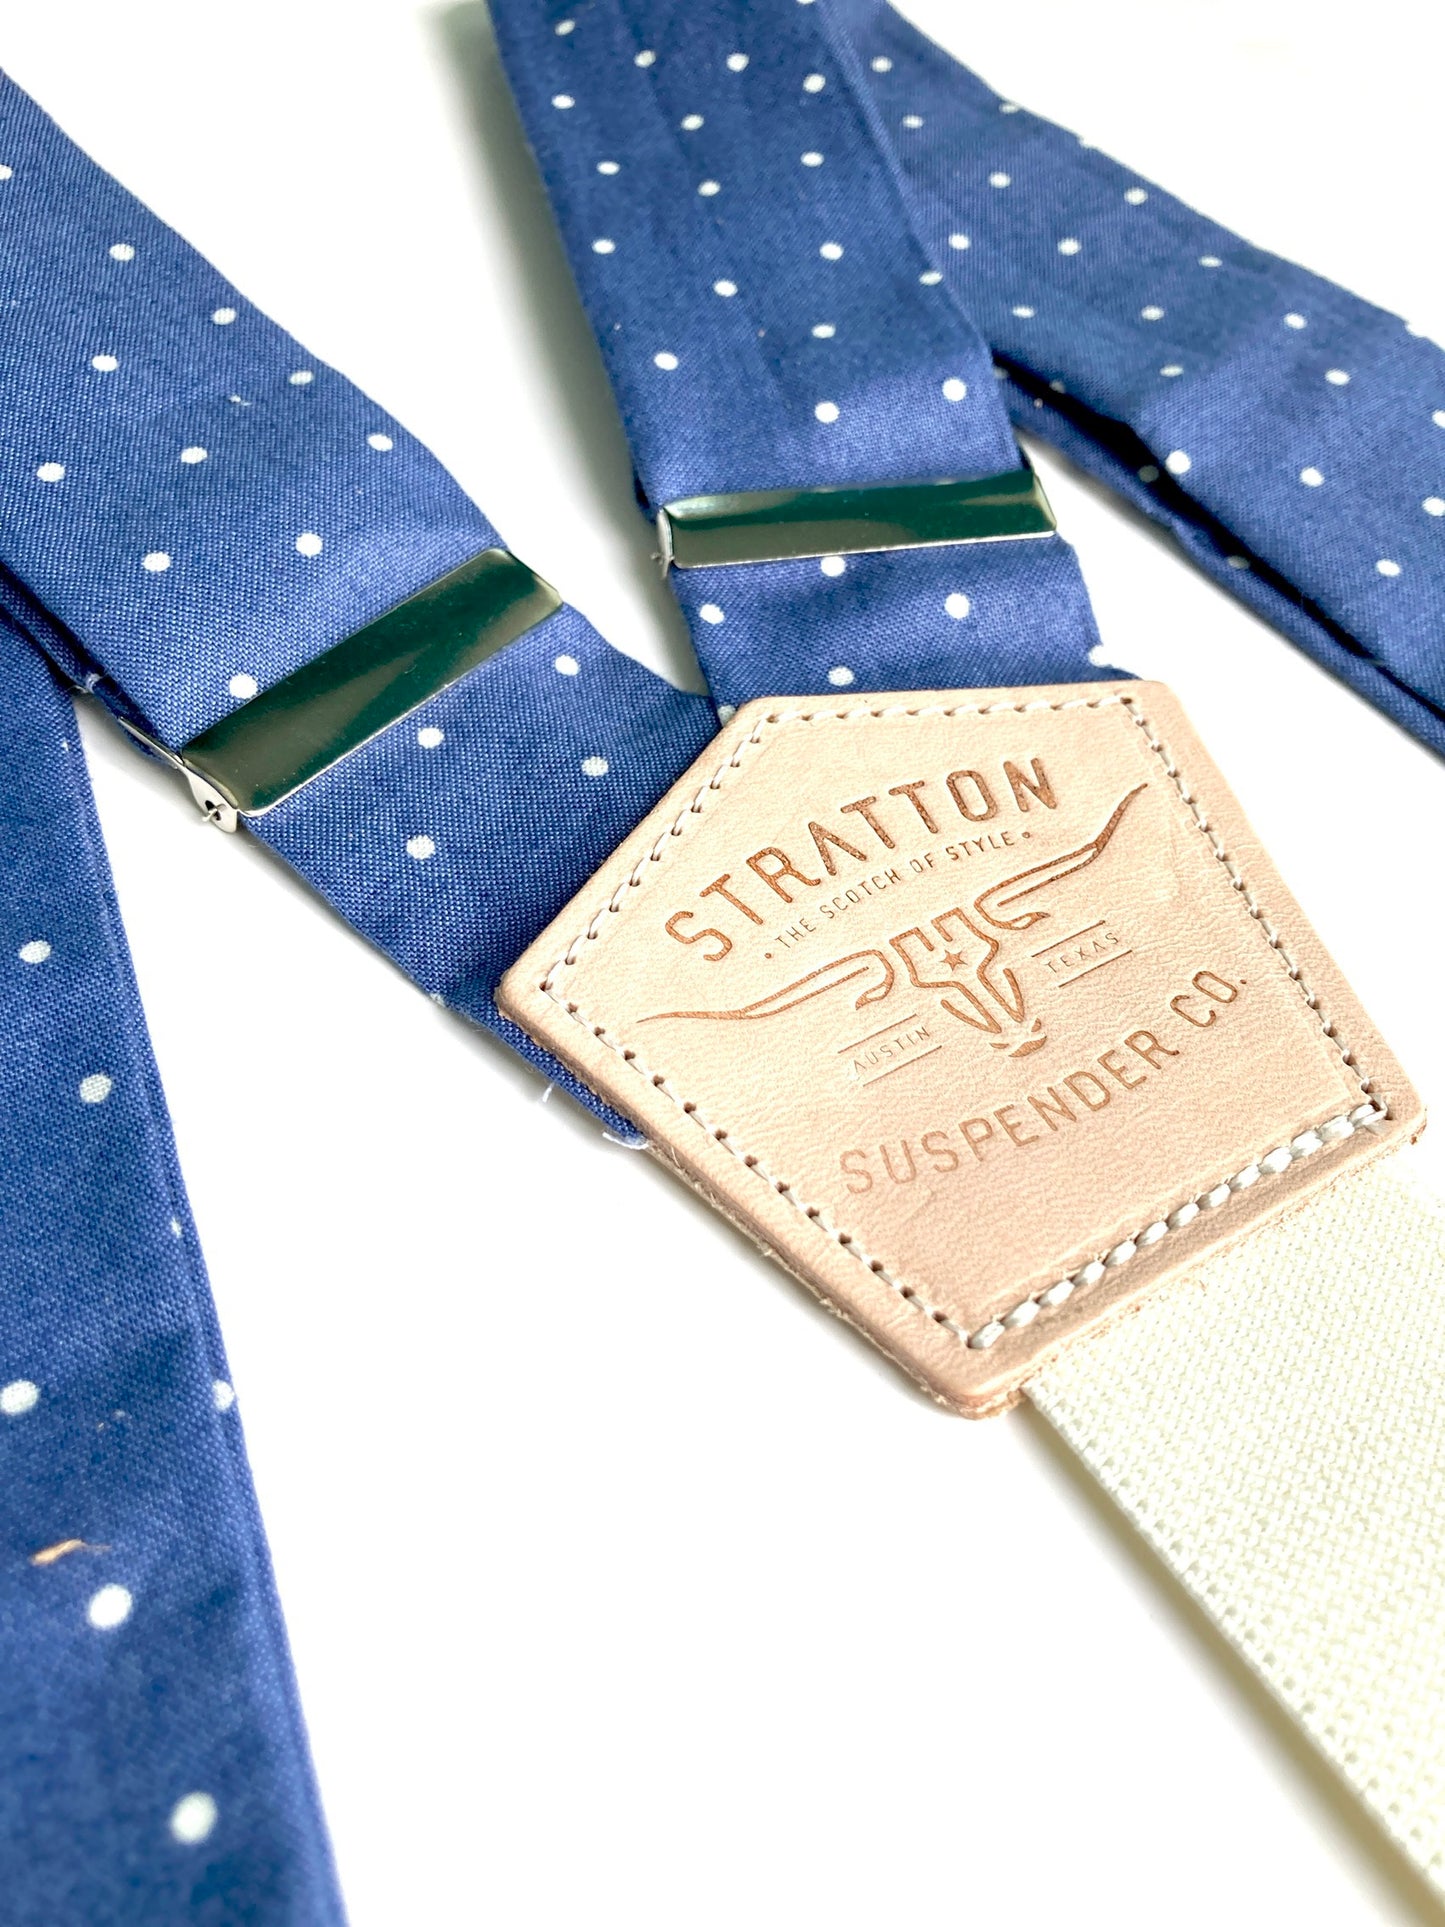 Stratton Suspender Co. Straps in Vintage Blue with Cream Polkadot